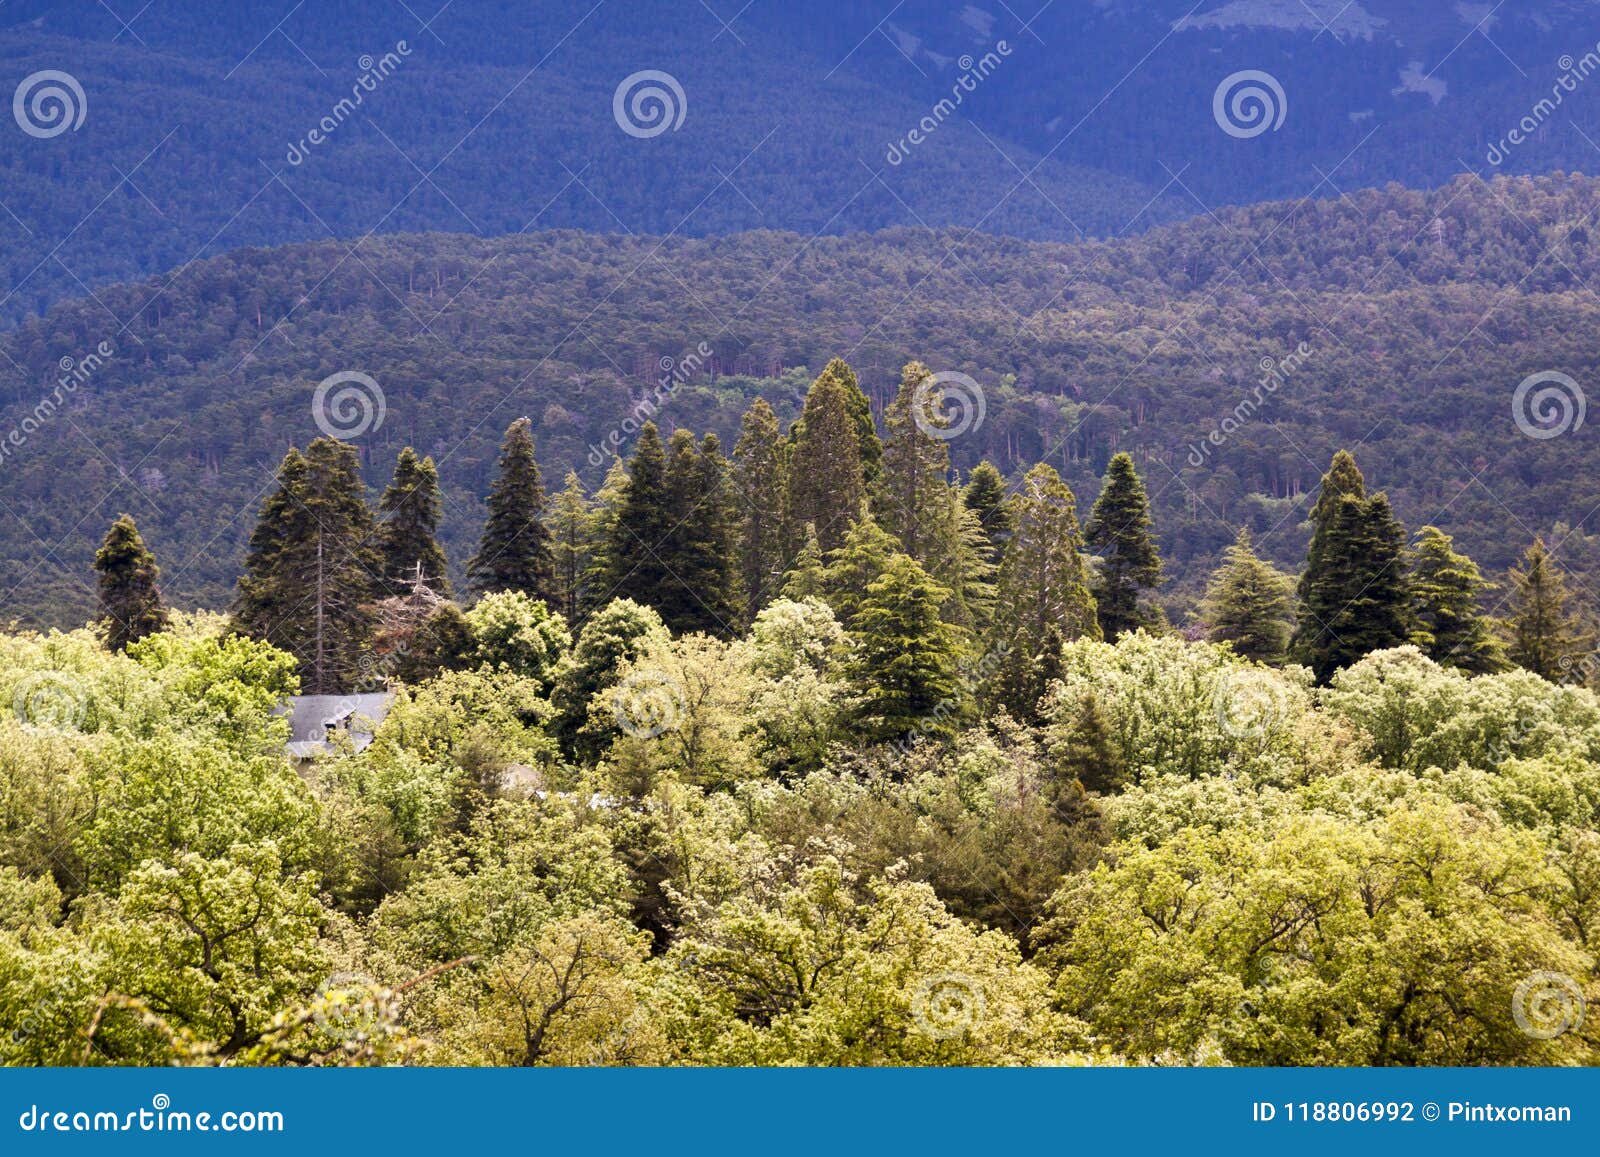 forest of oaks, pines and firs in sierra de guadarrama